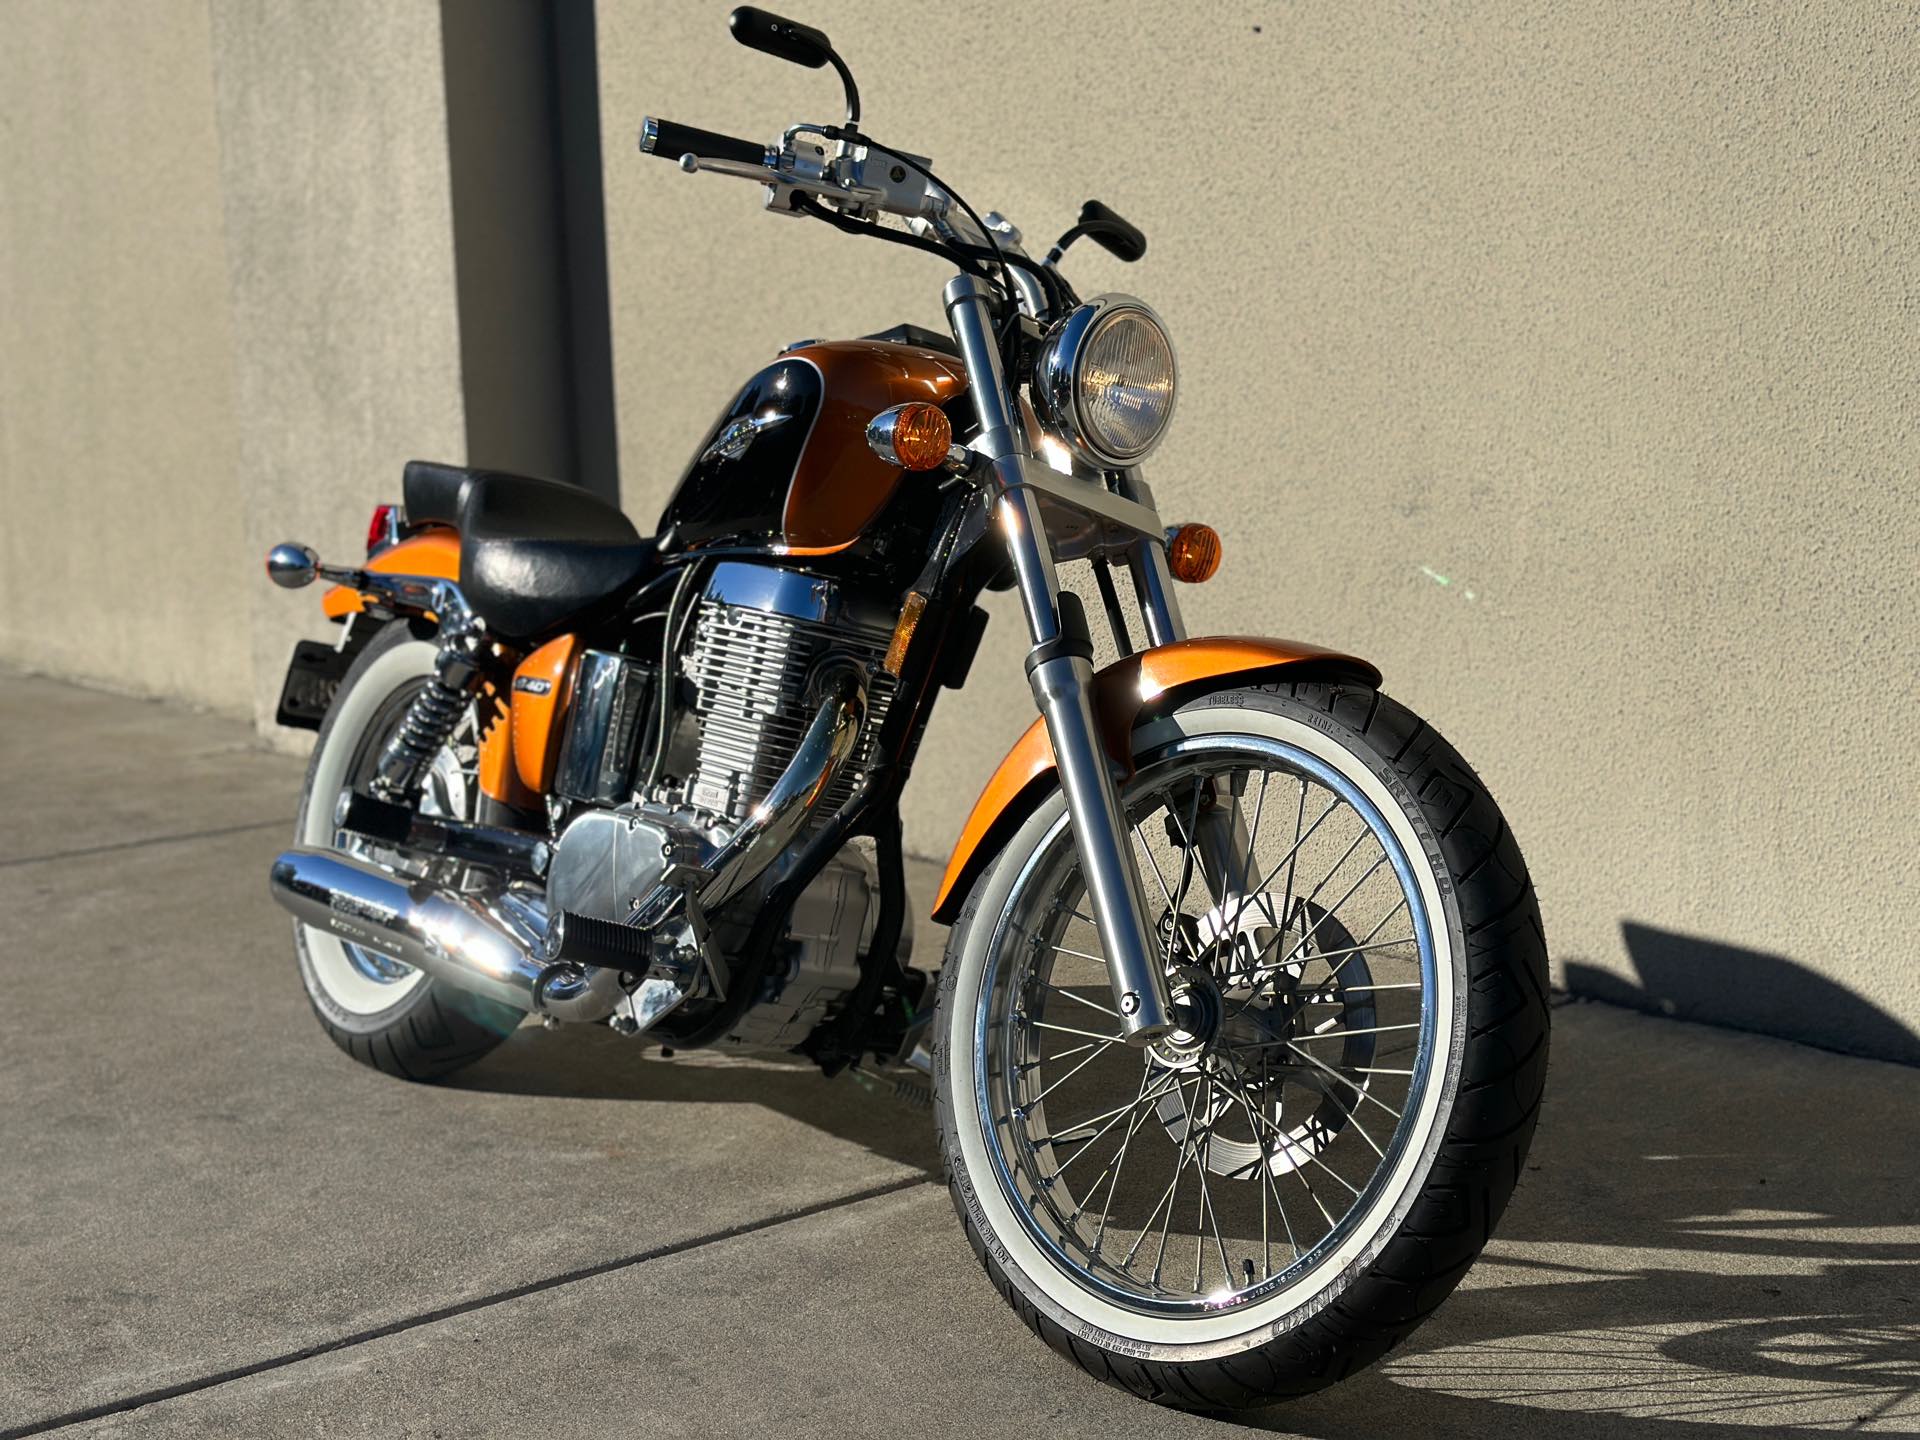 2014 Suzuki Boulevard S40 at San Jose Harley-Davidson